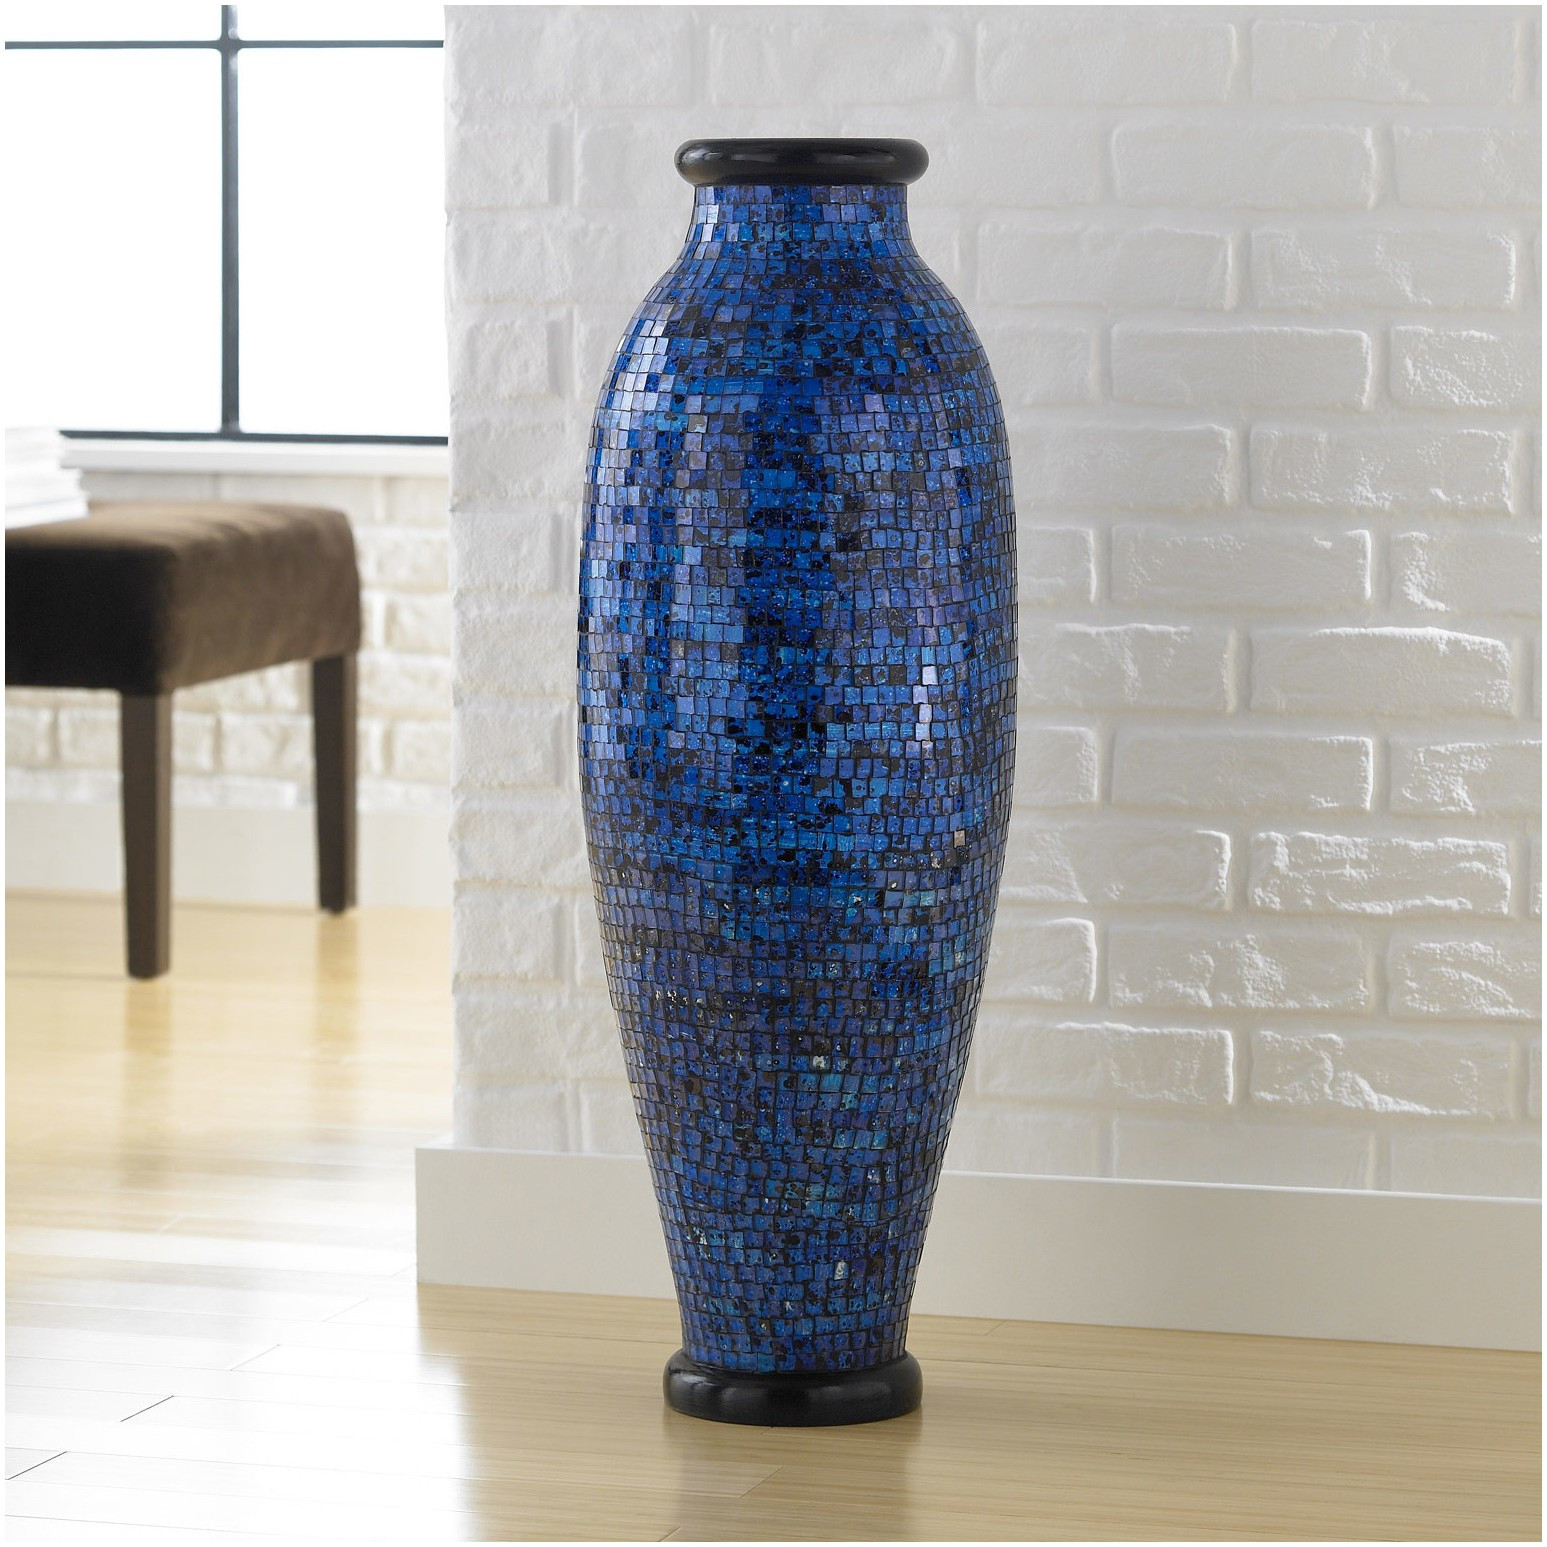 Tall Blue Vase Of 21 Beau Decorative Vases Anciendemutu org In Ideas Decorative Vases About Karman Floor Vase Vasesh Xyberworks Floori 0d Vases Floor Decorative Vases